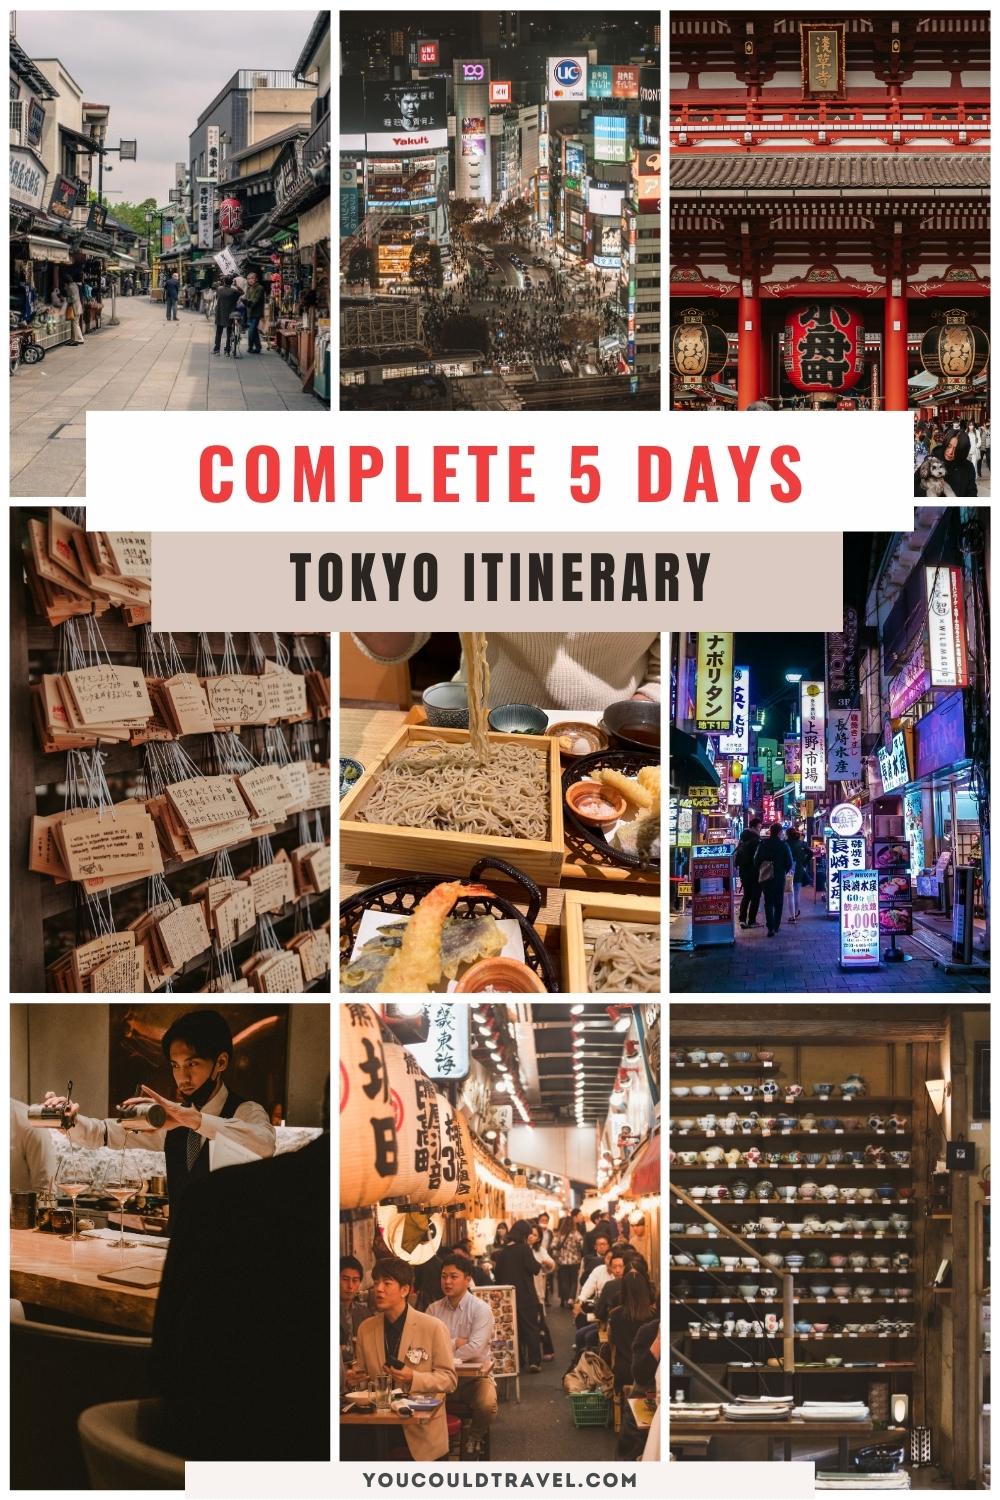 Tokyo itinerary 5 days